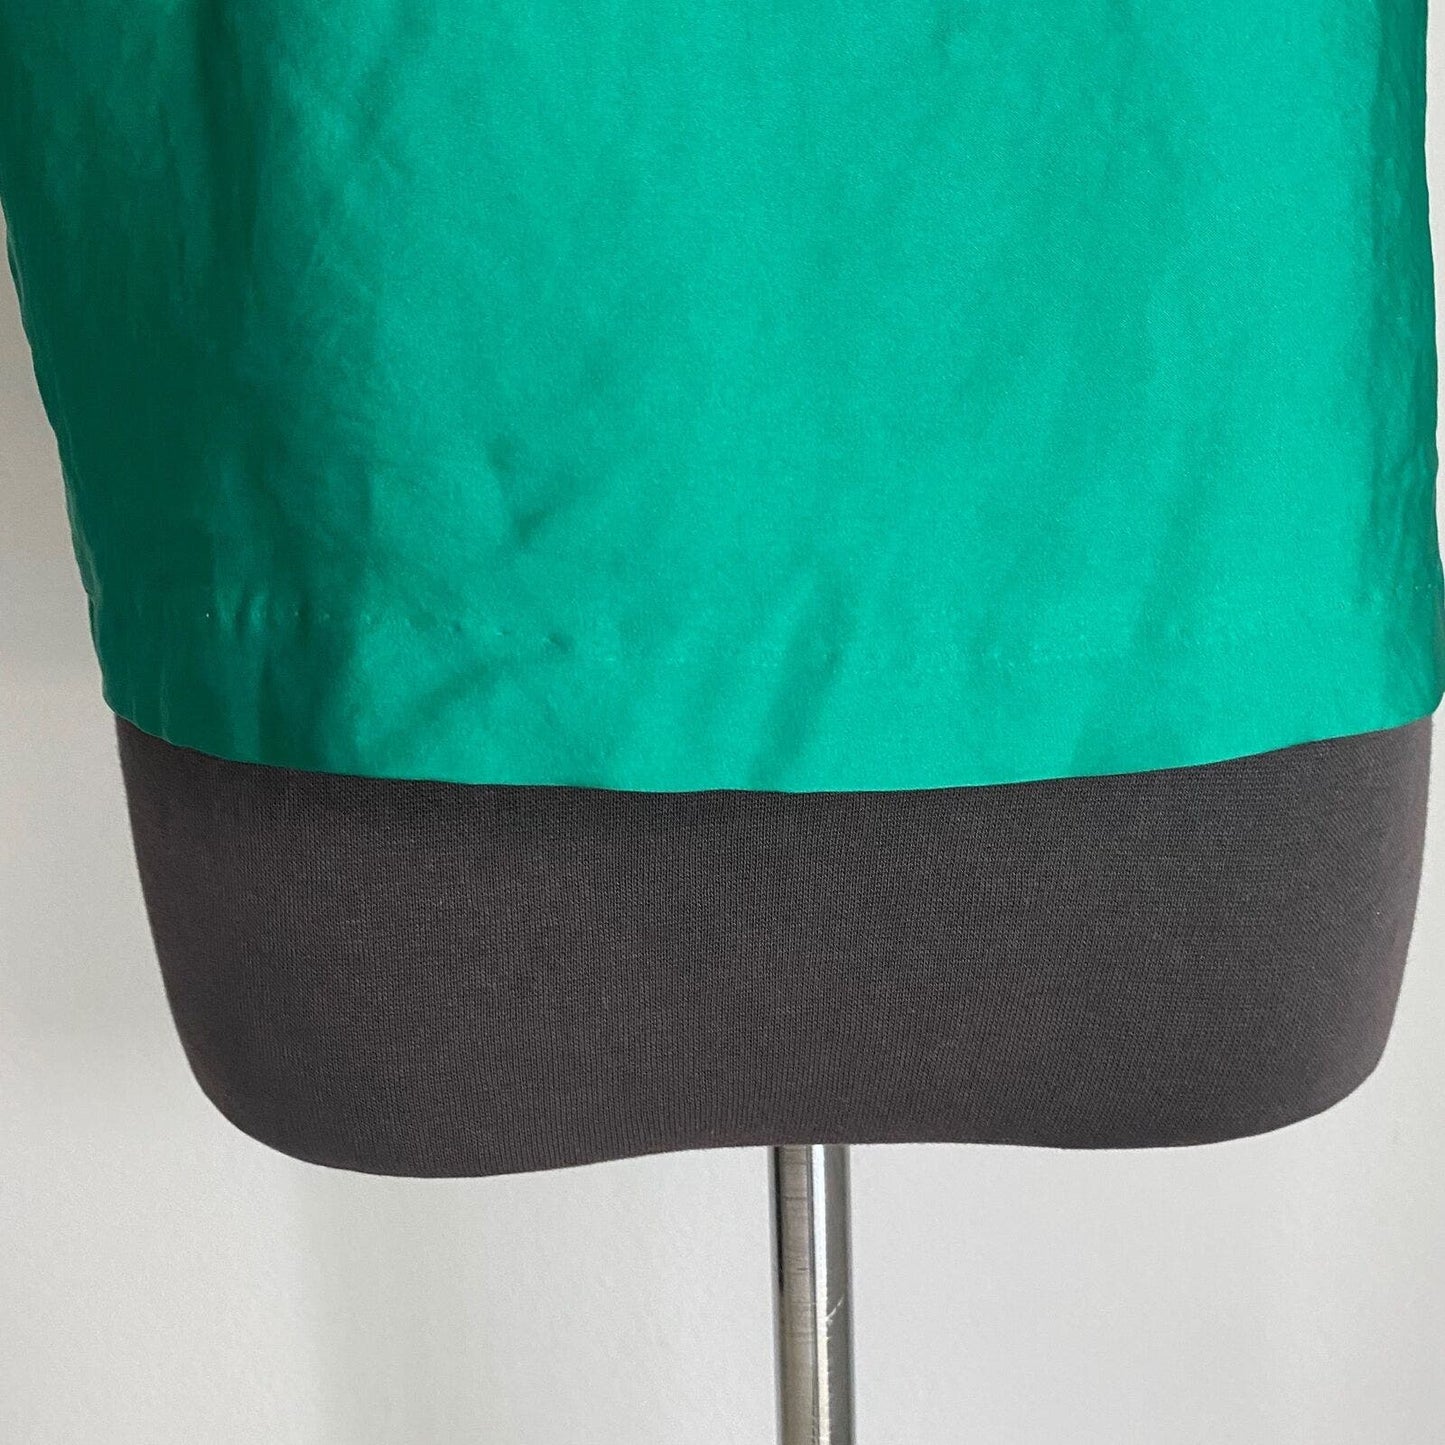 Express sz XS short sleeve bright green boho work career blouse